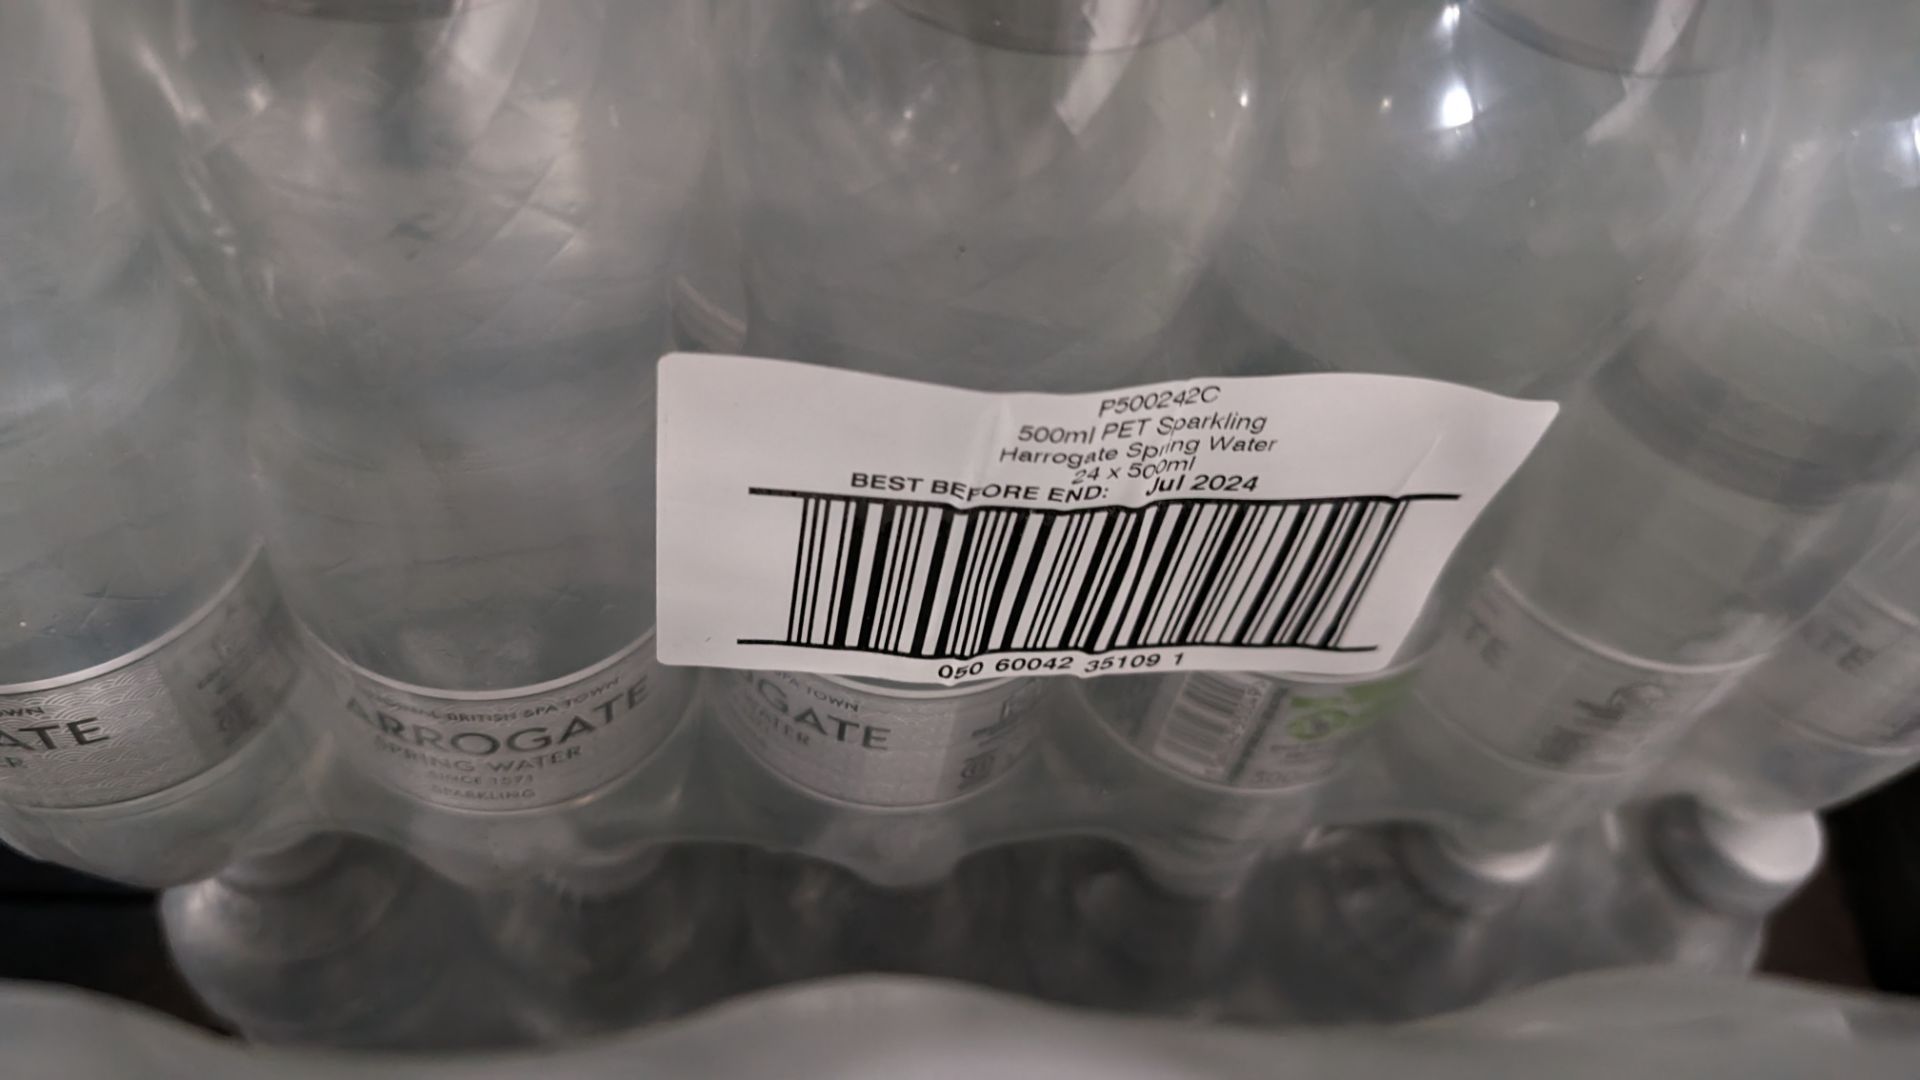 72 off 500ml bottles of Harrogate sparkling spring water, best before date July 2024 (3 cartons) - Image 4 of 4